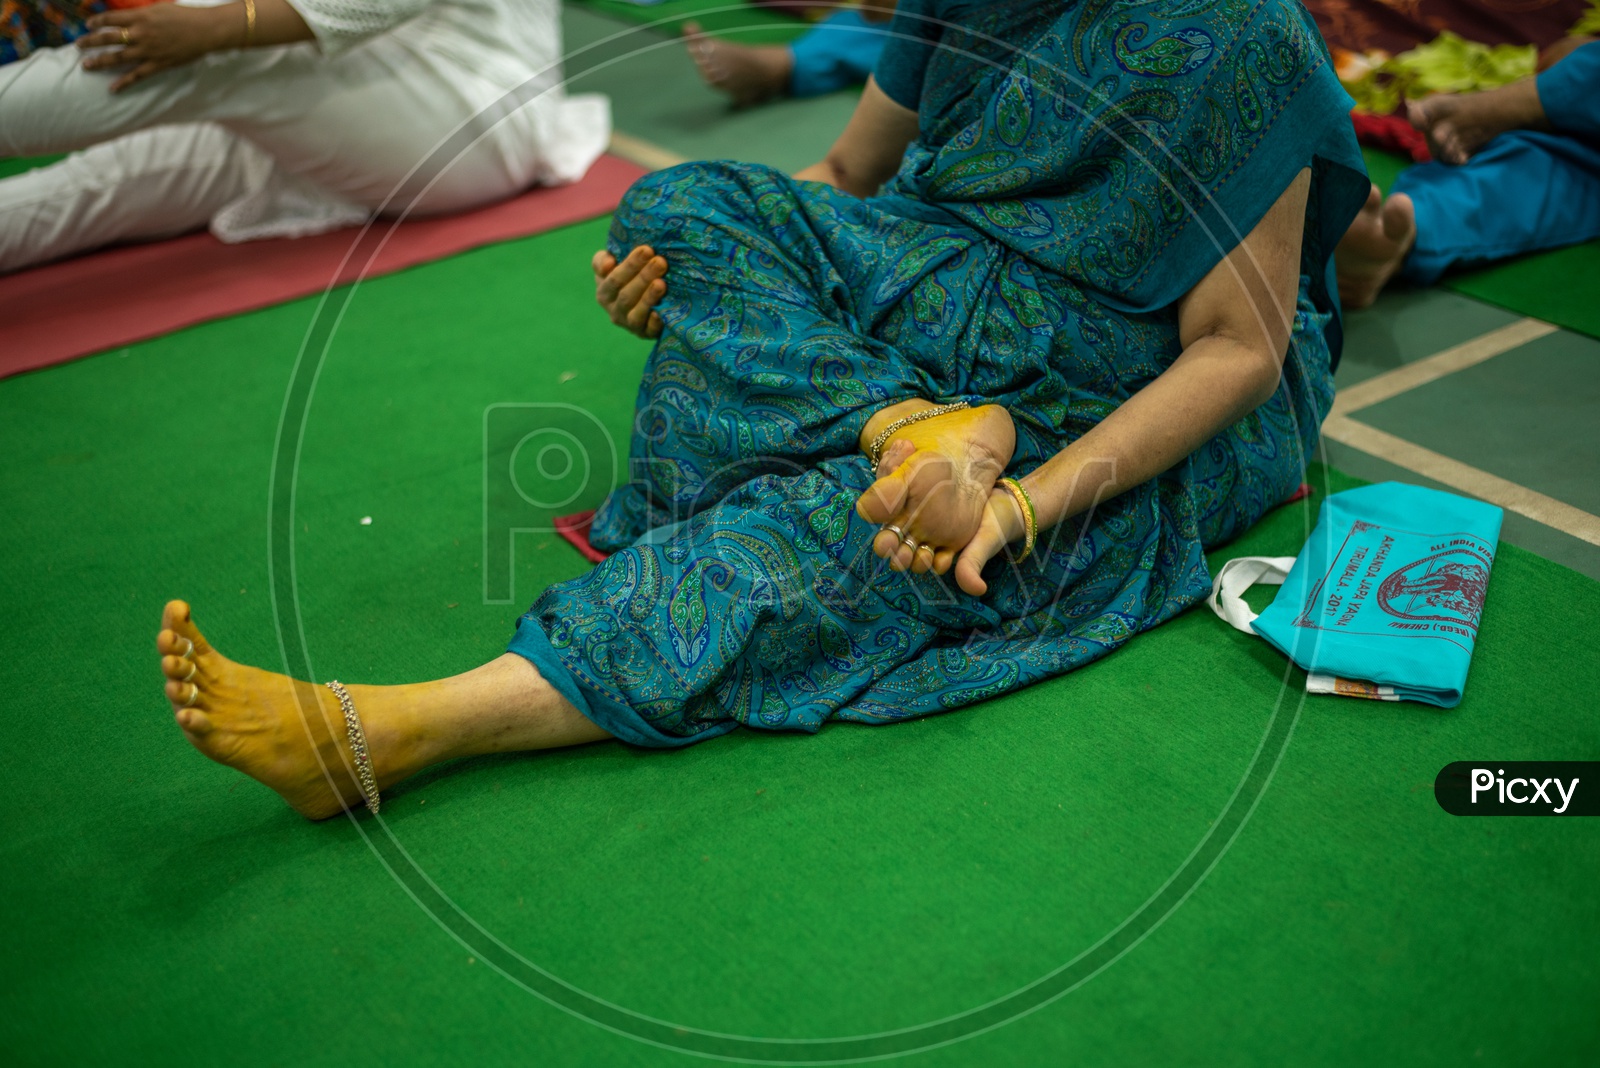 A senior/elder woman practising Yoga. International Yoga Day, 2018